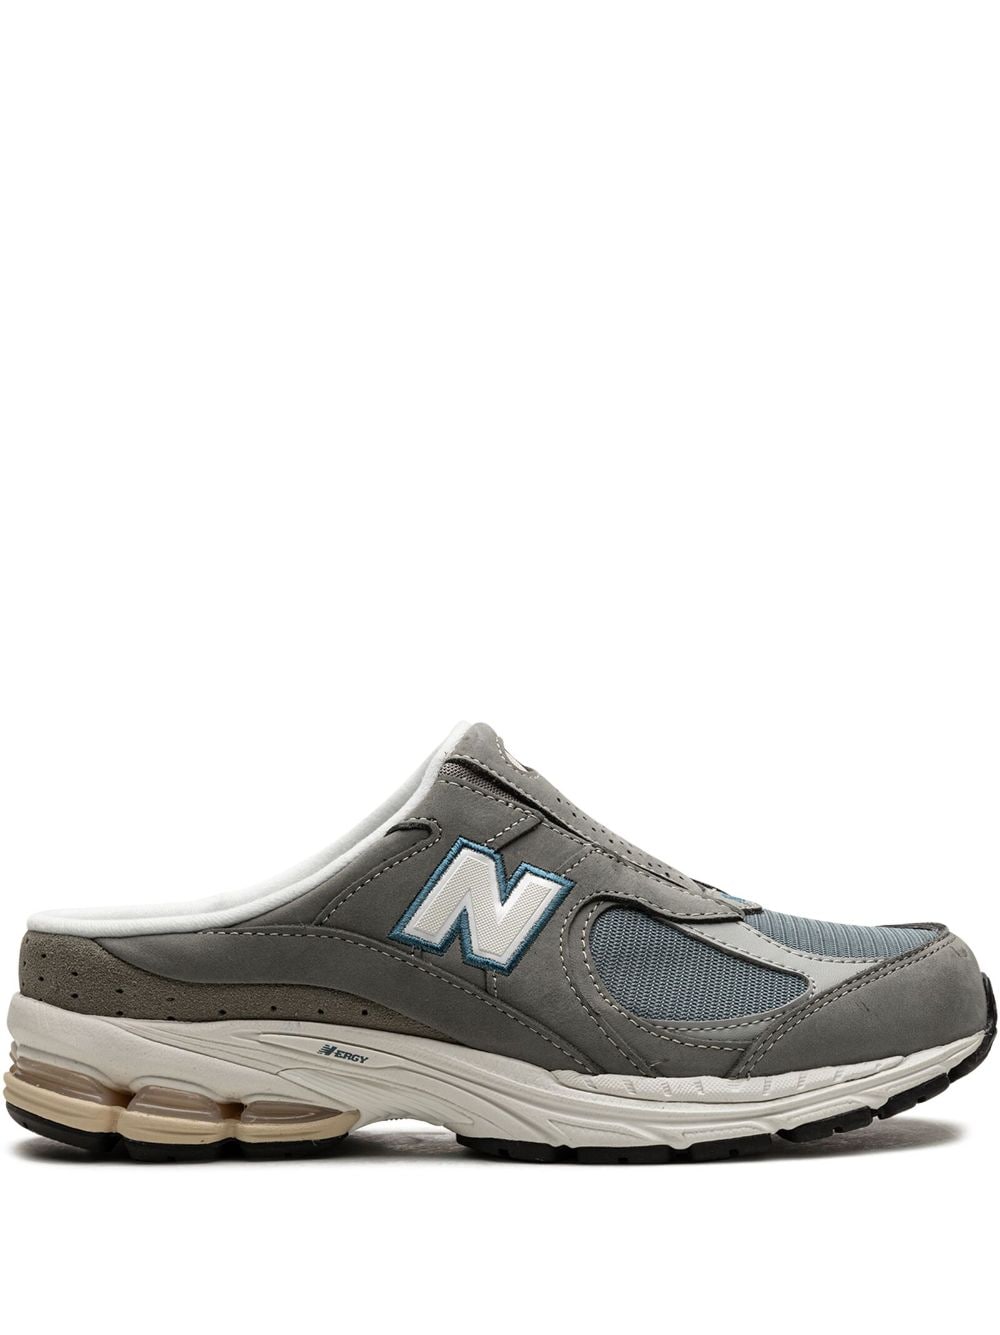 New Balance 2002R "Marblehead" sneaker mules - Grey